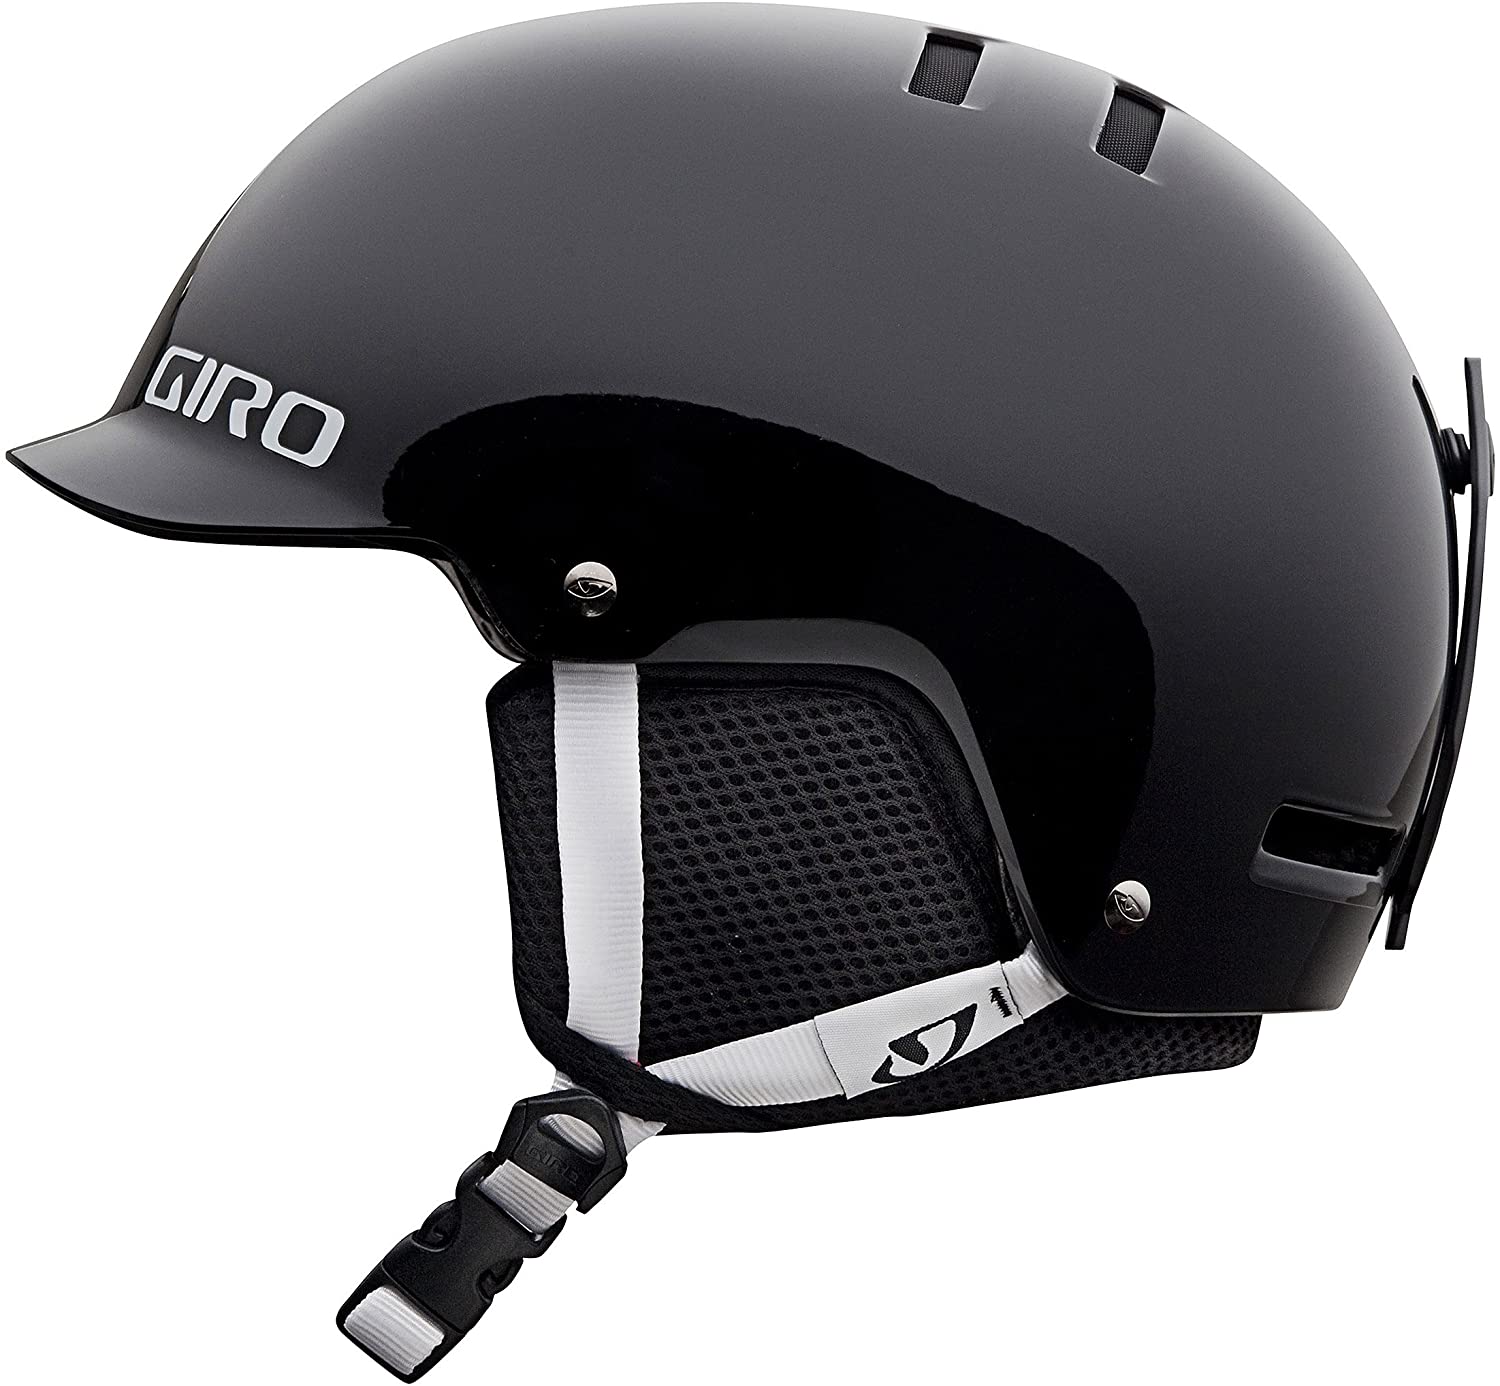 Giro Youth Vault Snow Helmet